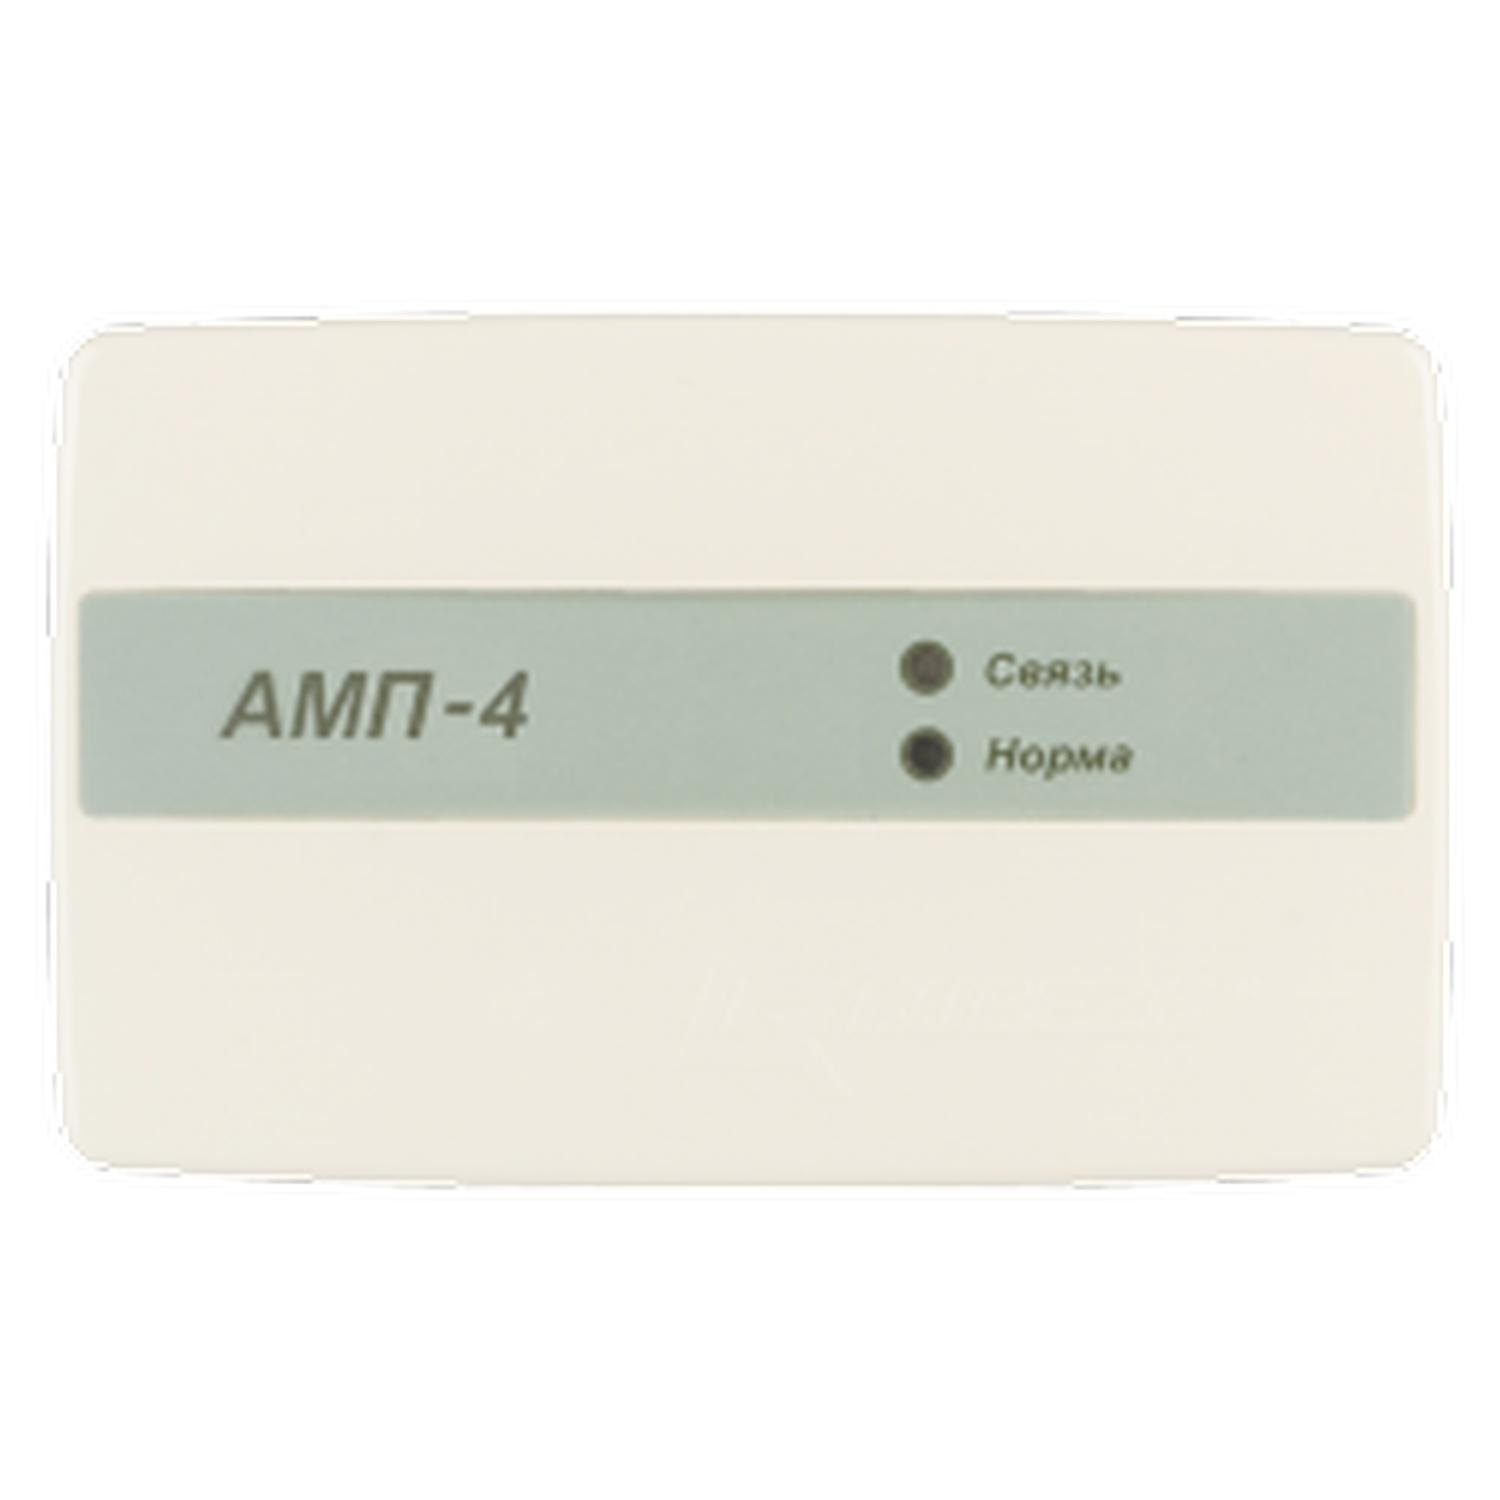 Метка АМП-4 Адресная система (АМП-4) Rbz-042102 Рубеж